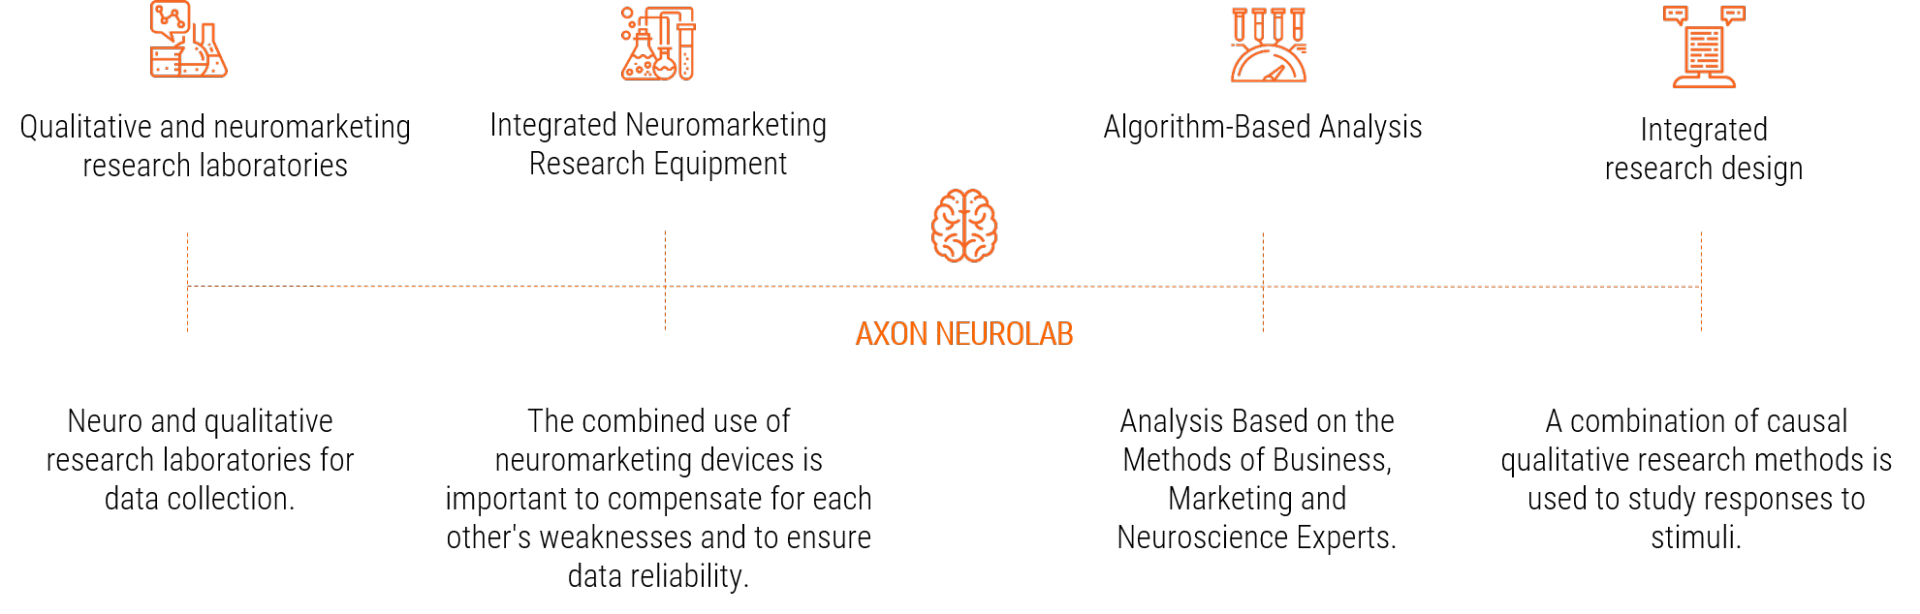 Axon Neurolab Features